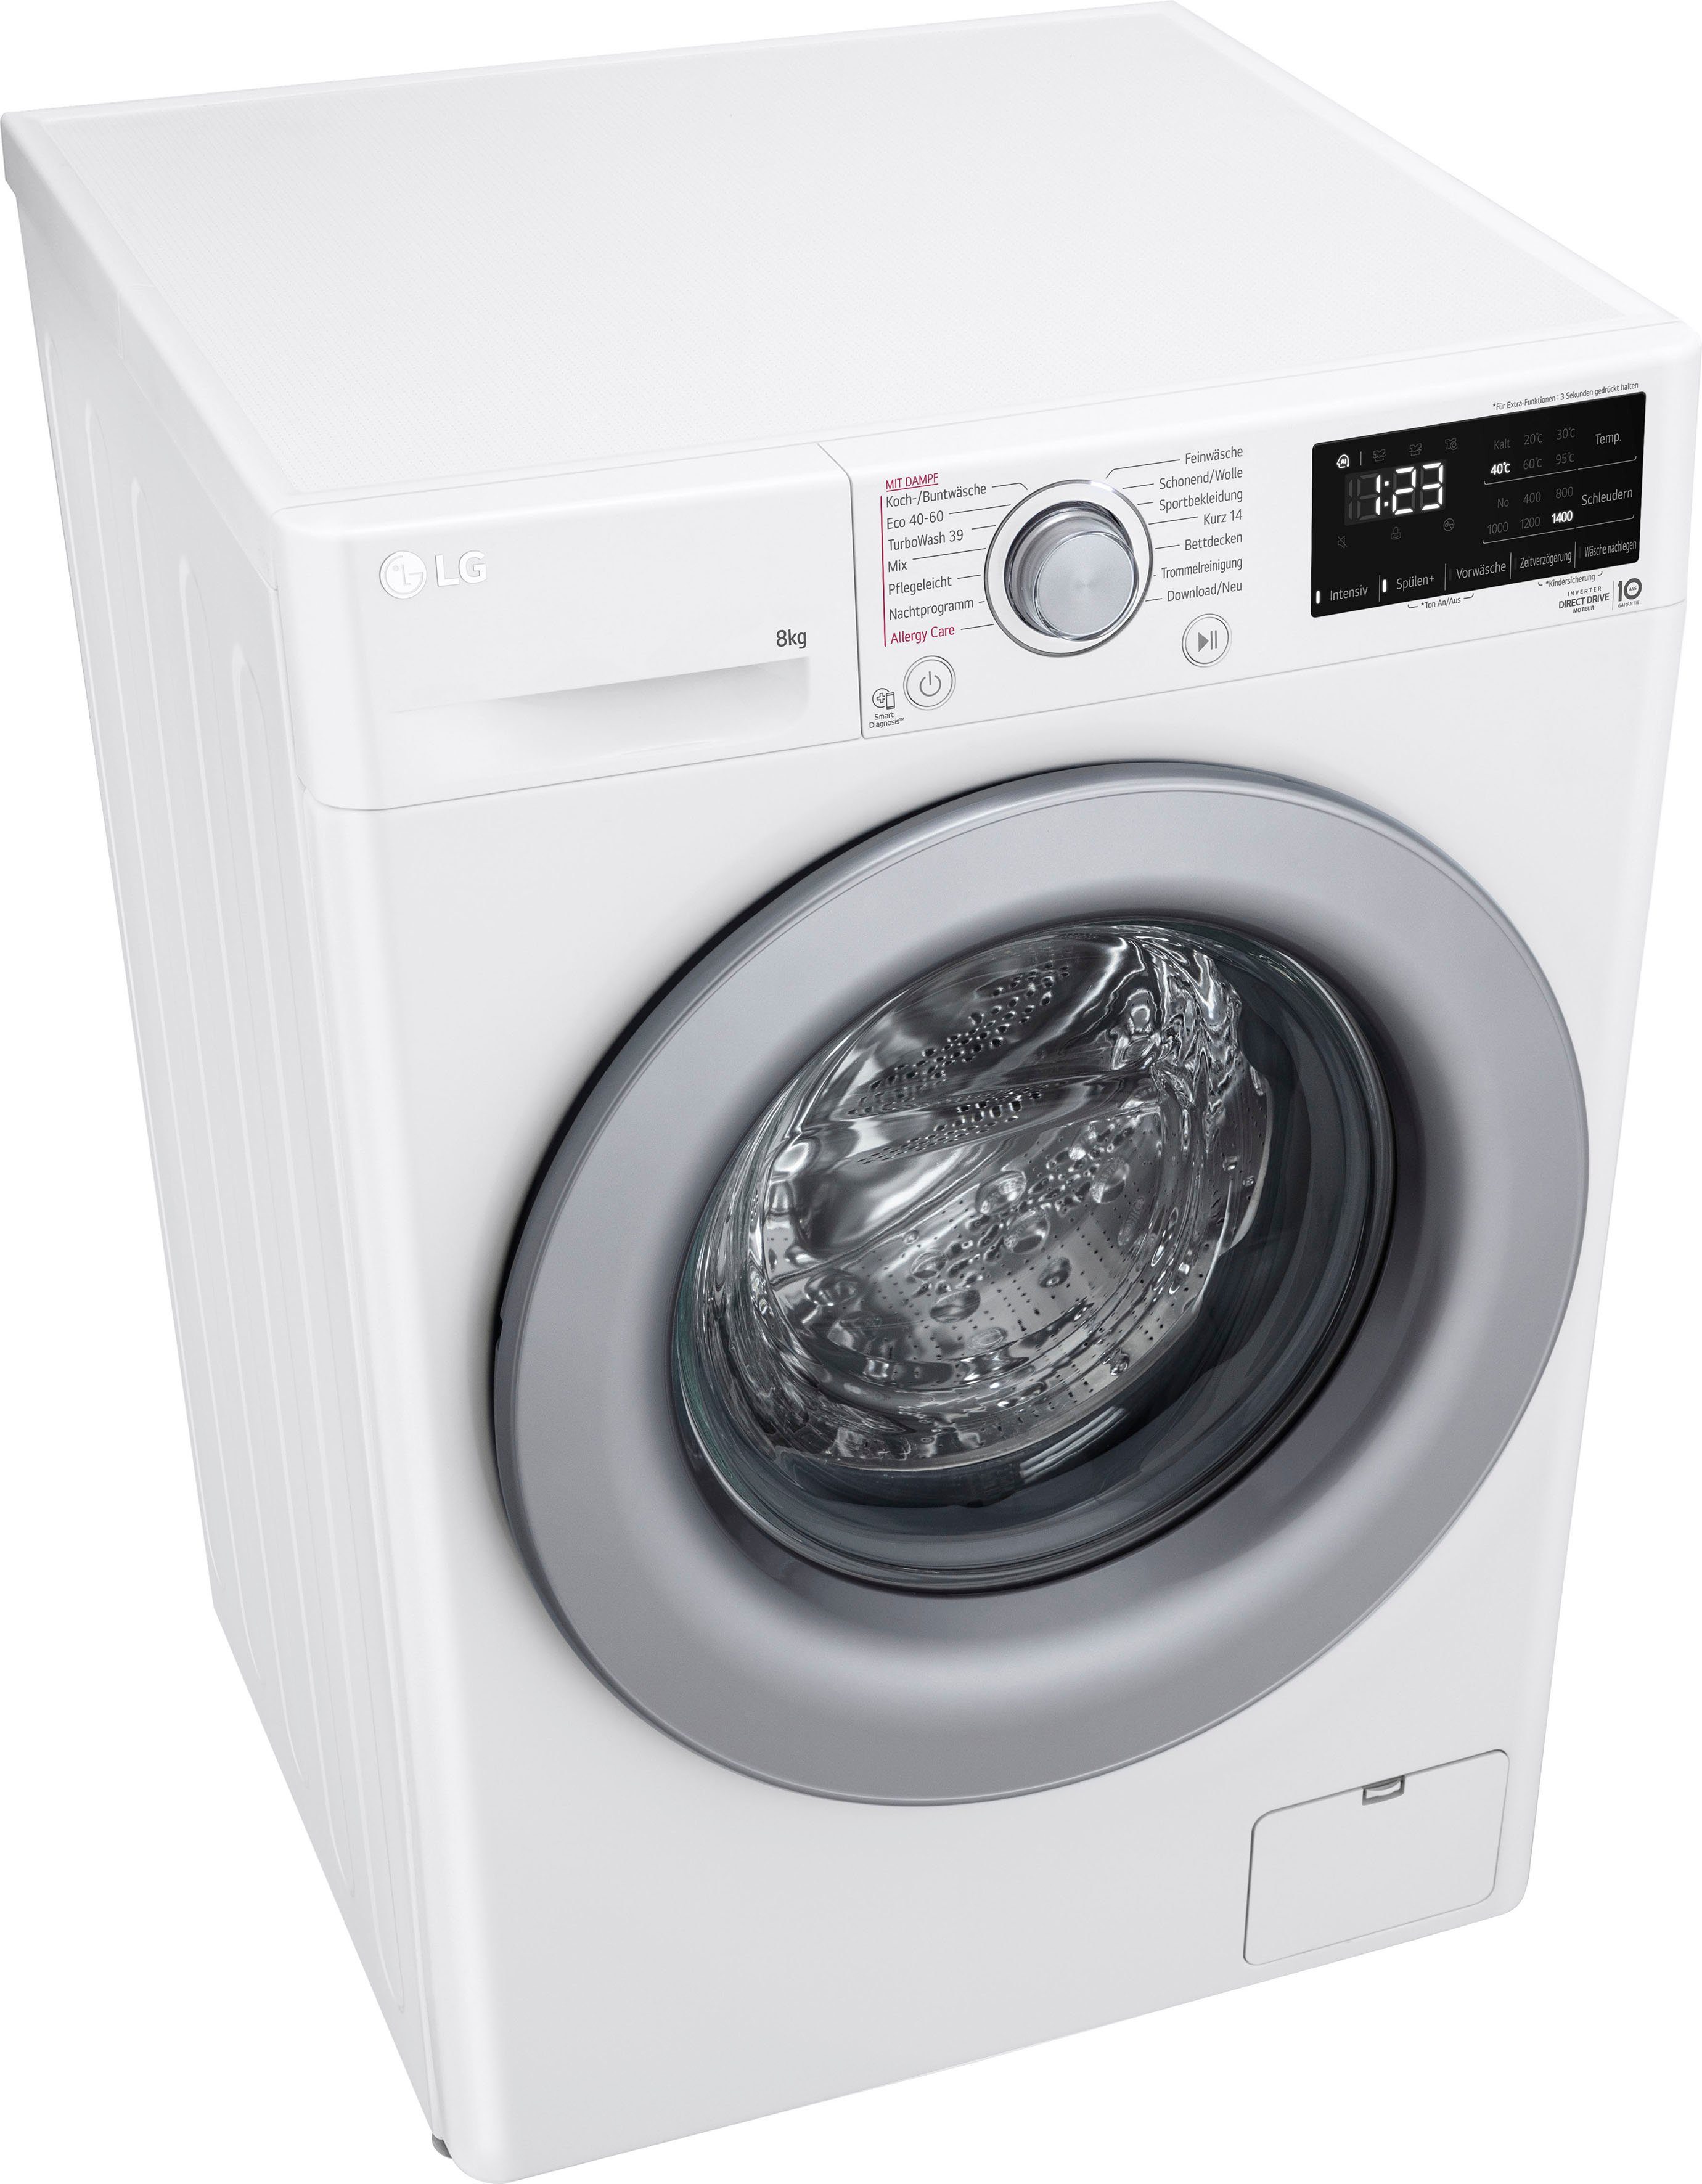 LG Waschmaschine Serie F4WV3284, kg, U/min 8 3 1400